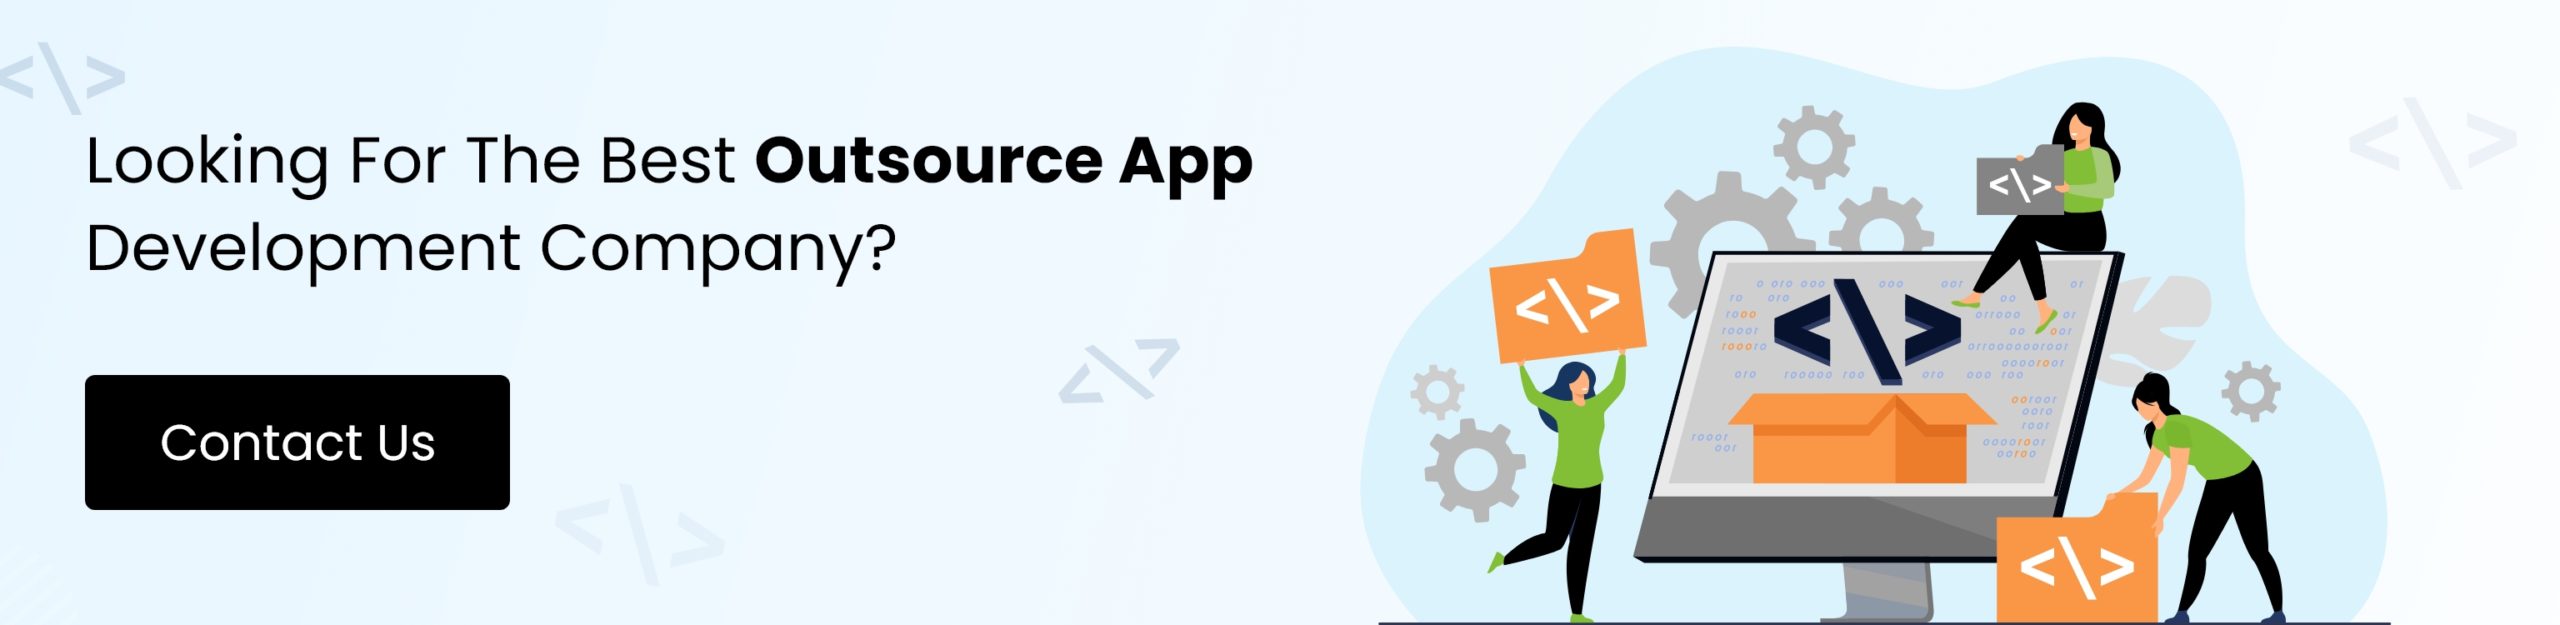 contact outsourcing app development company